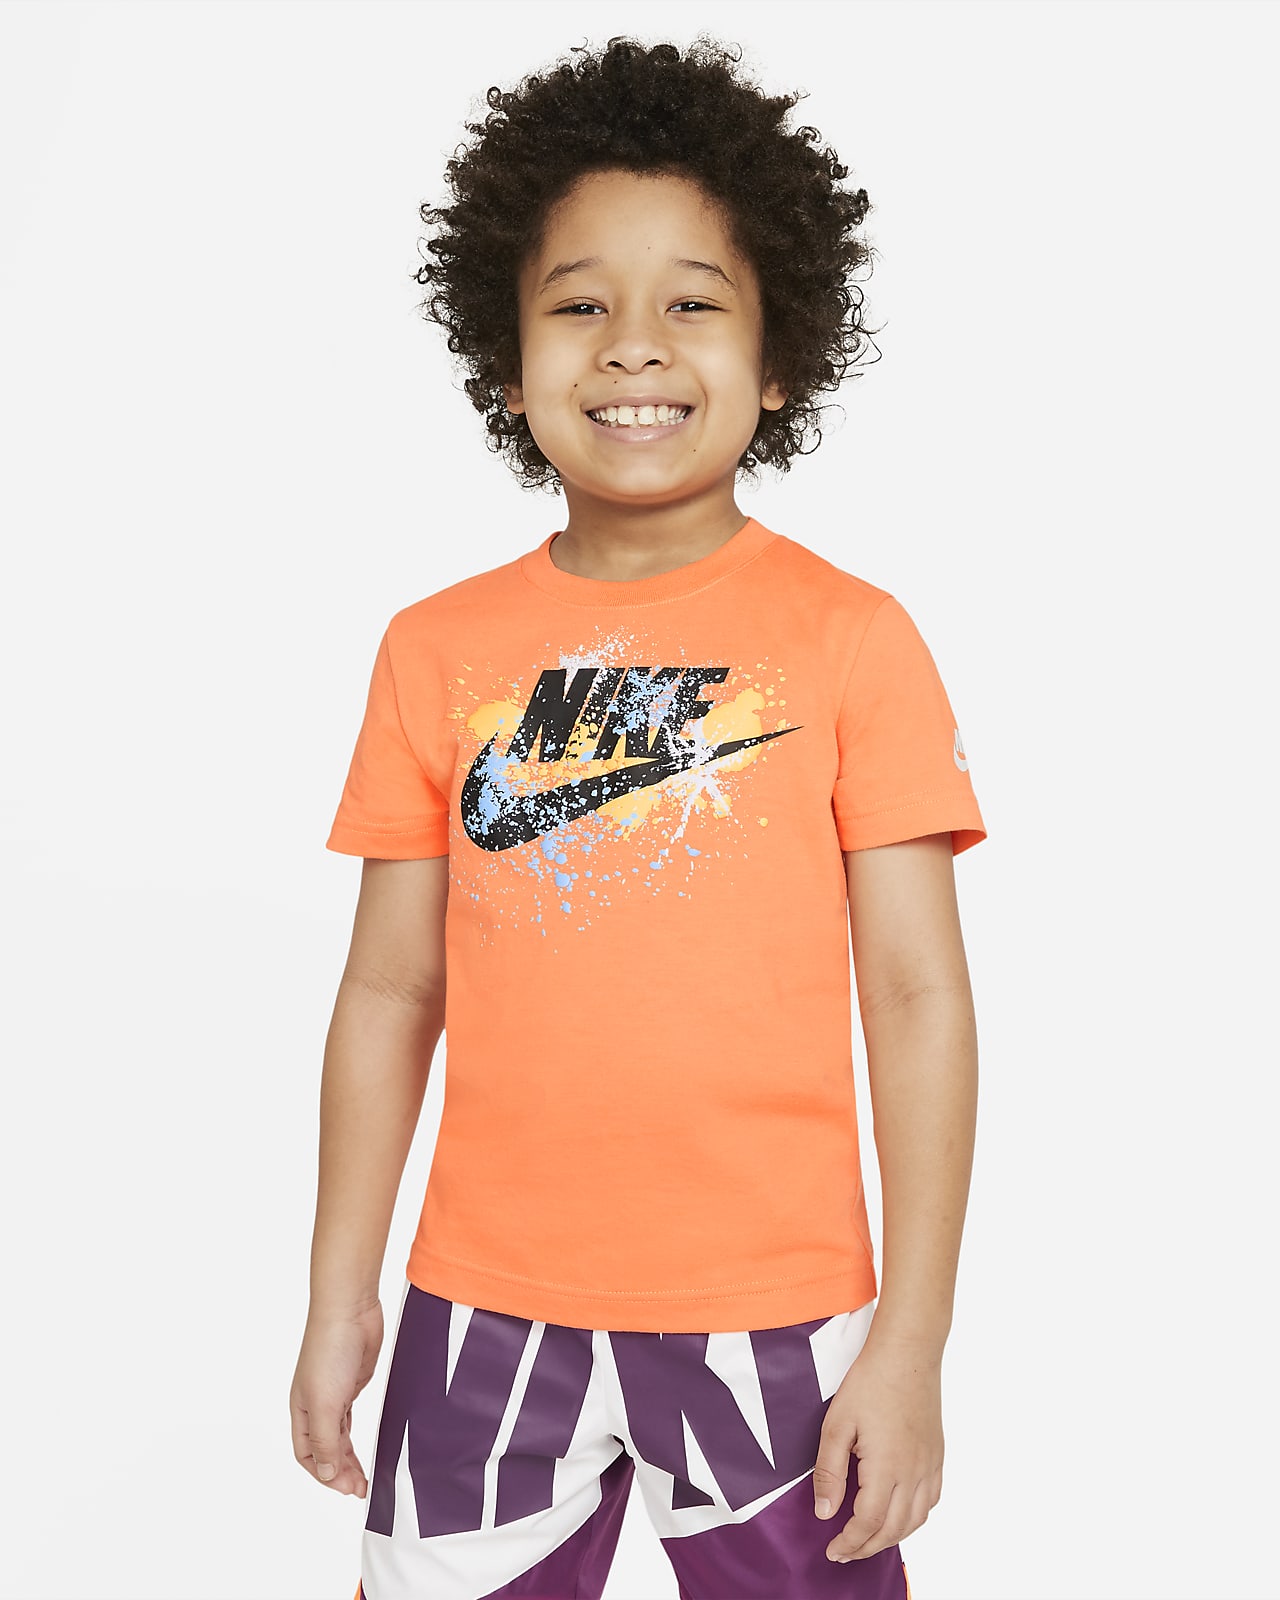 Nike Shirts Junior | vlr.eng.br